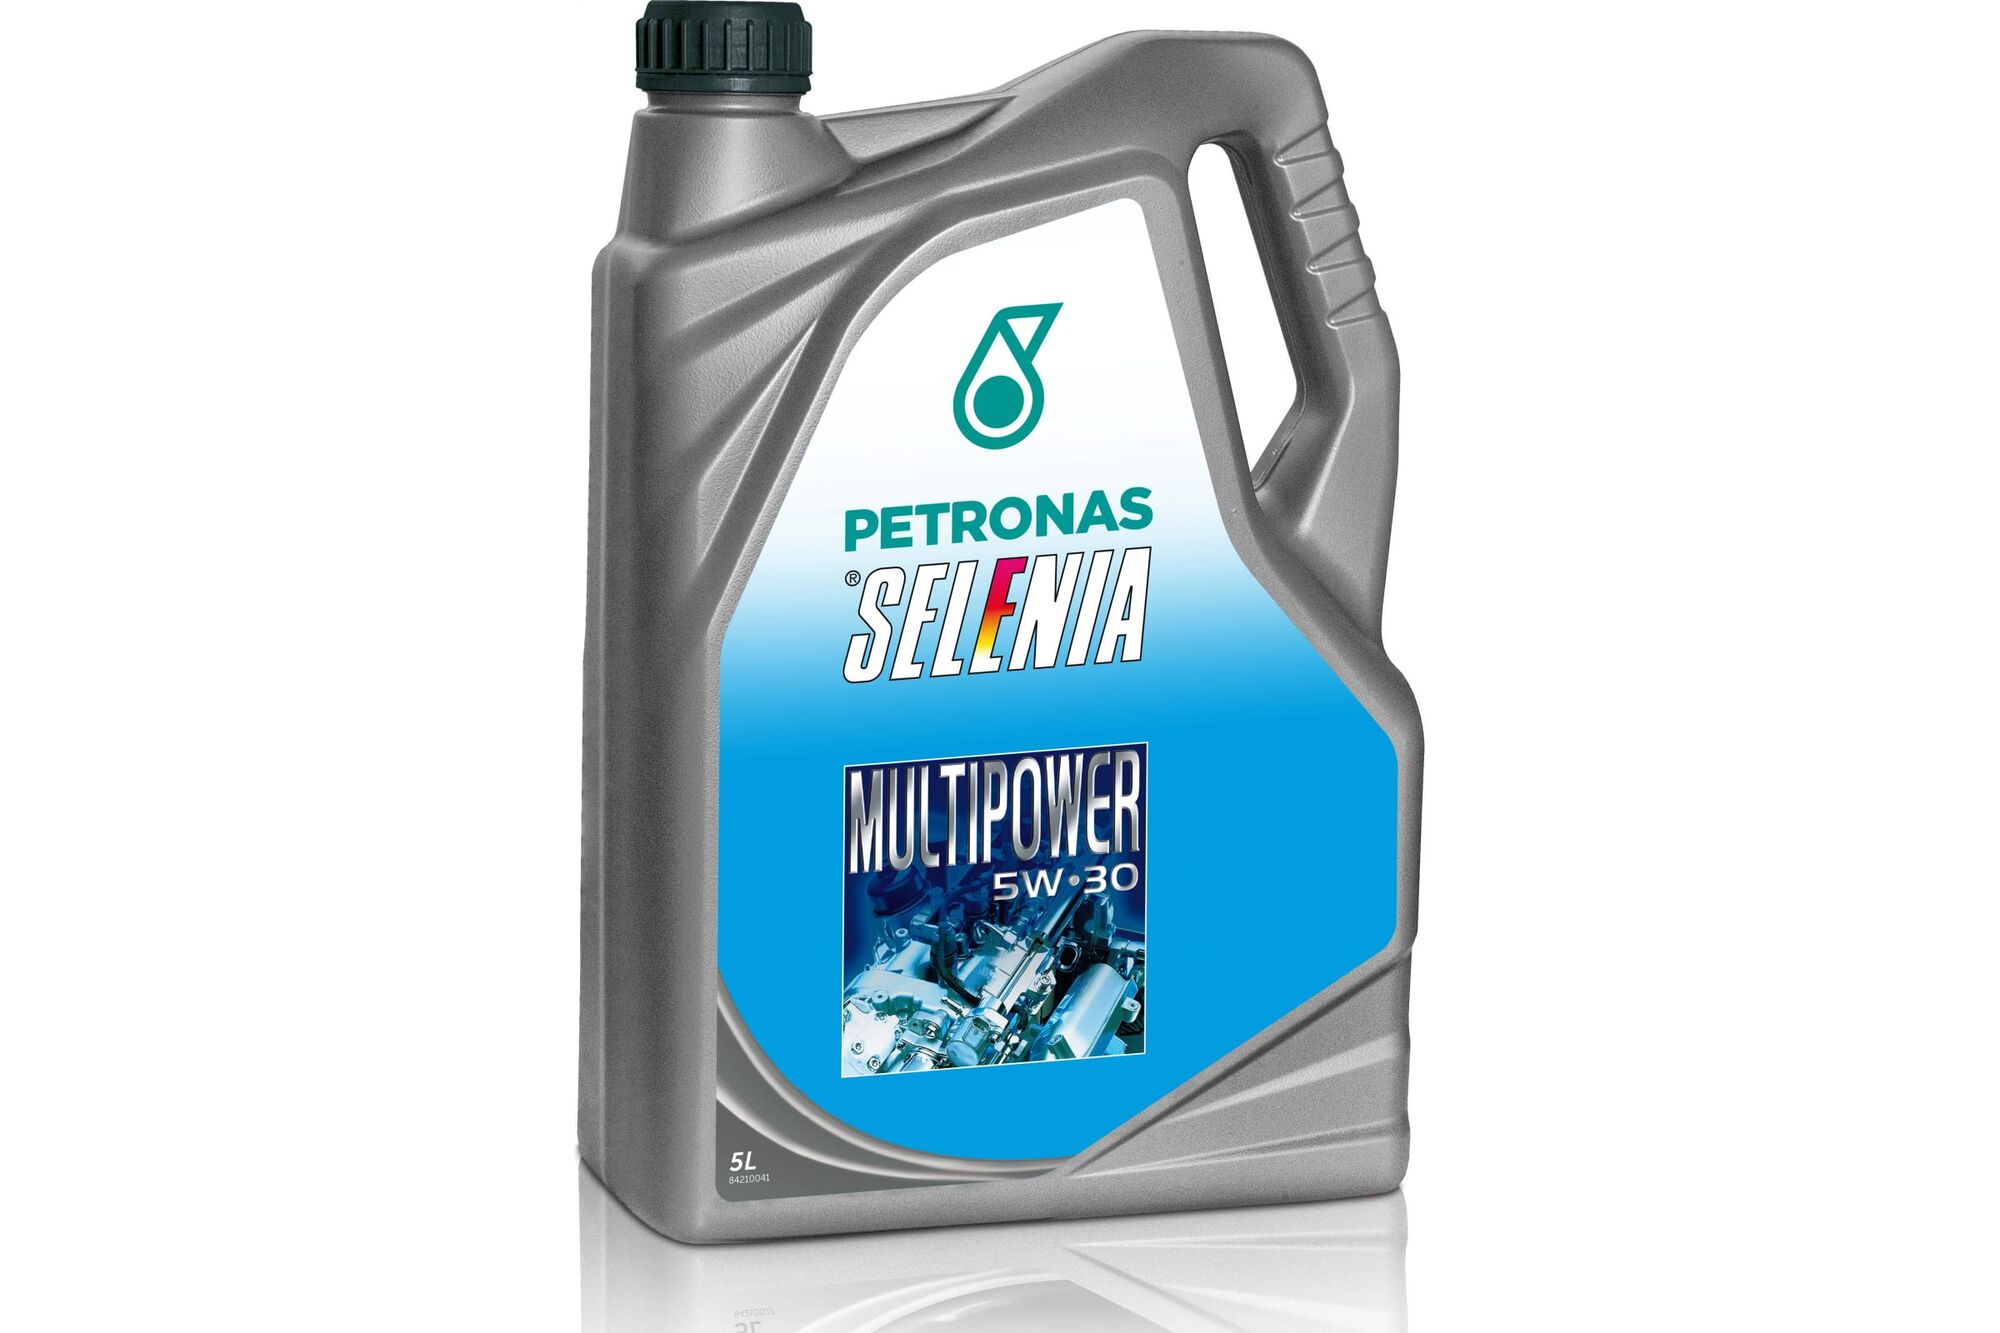 Моторное масло Petronas MLT PWR С3, синтетическое, 5W30, 5 л, ACEA C3 70551M12EU